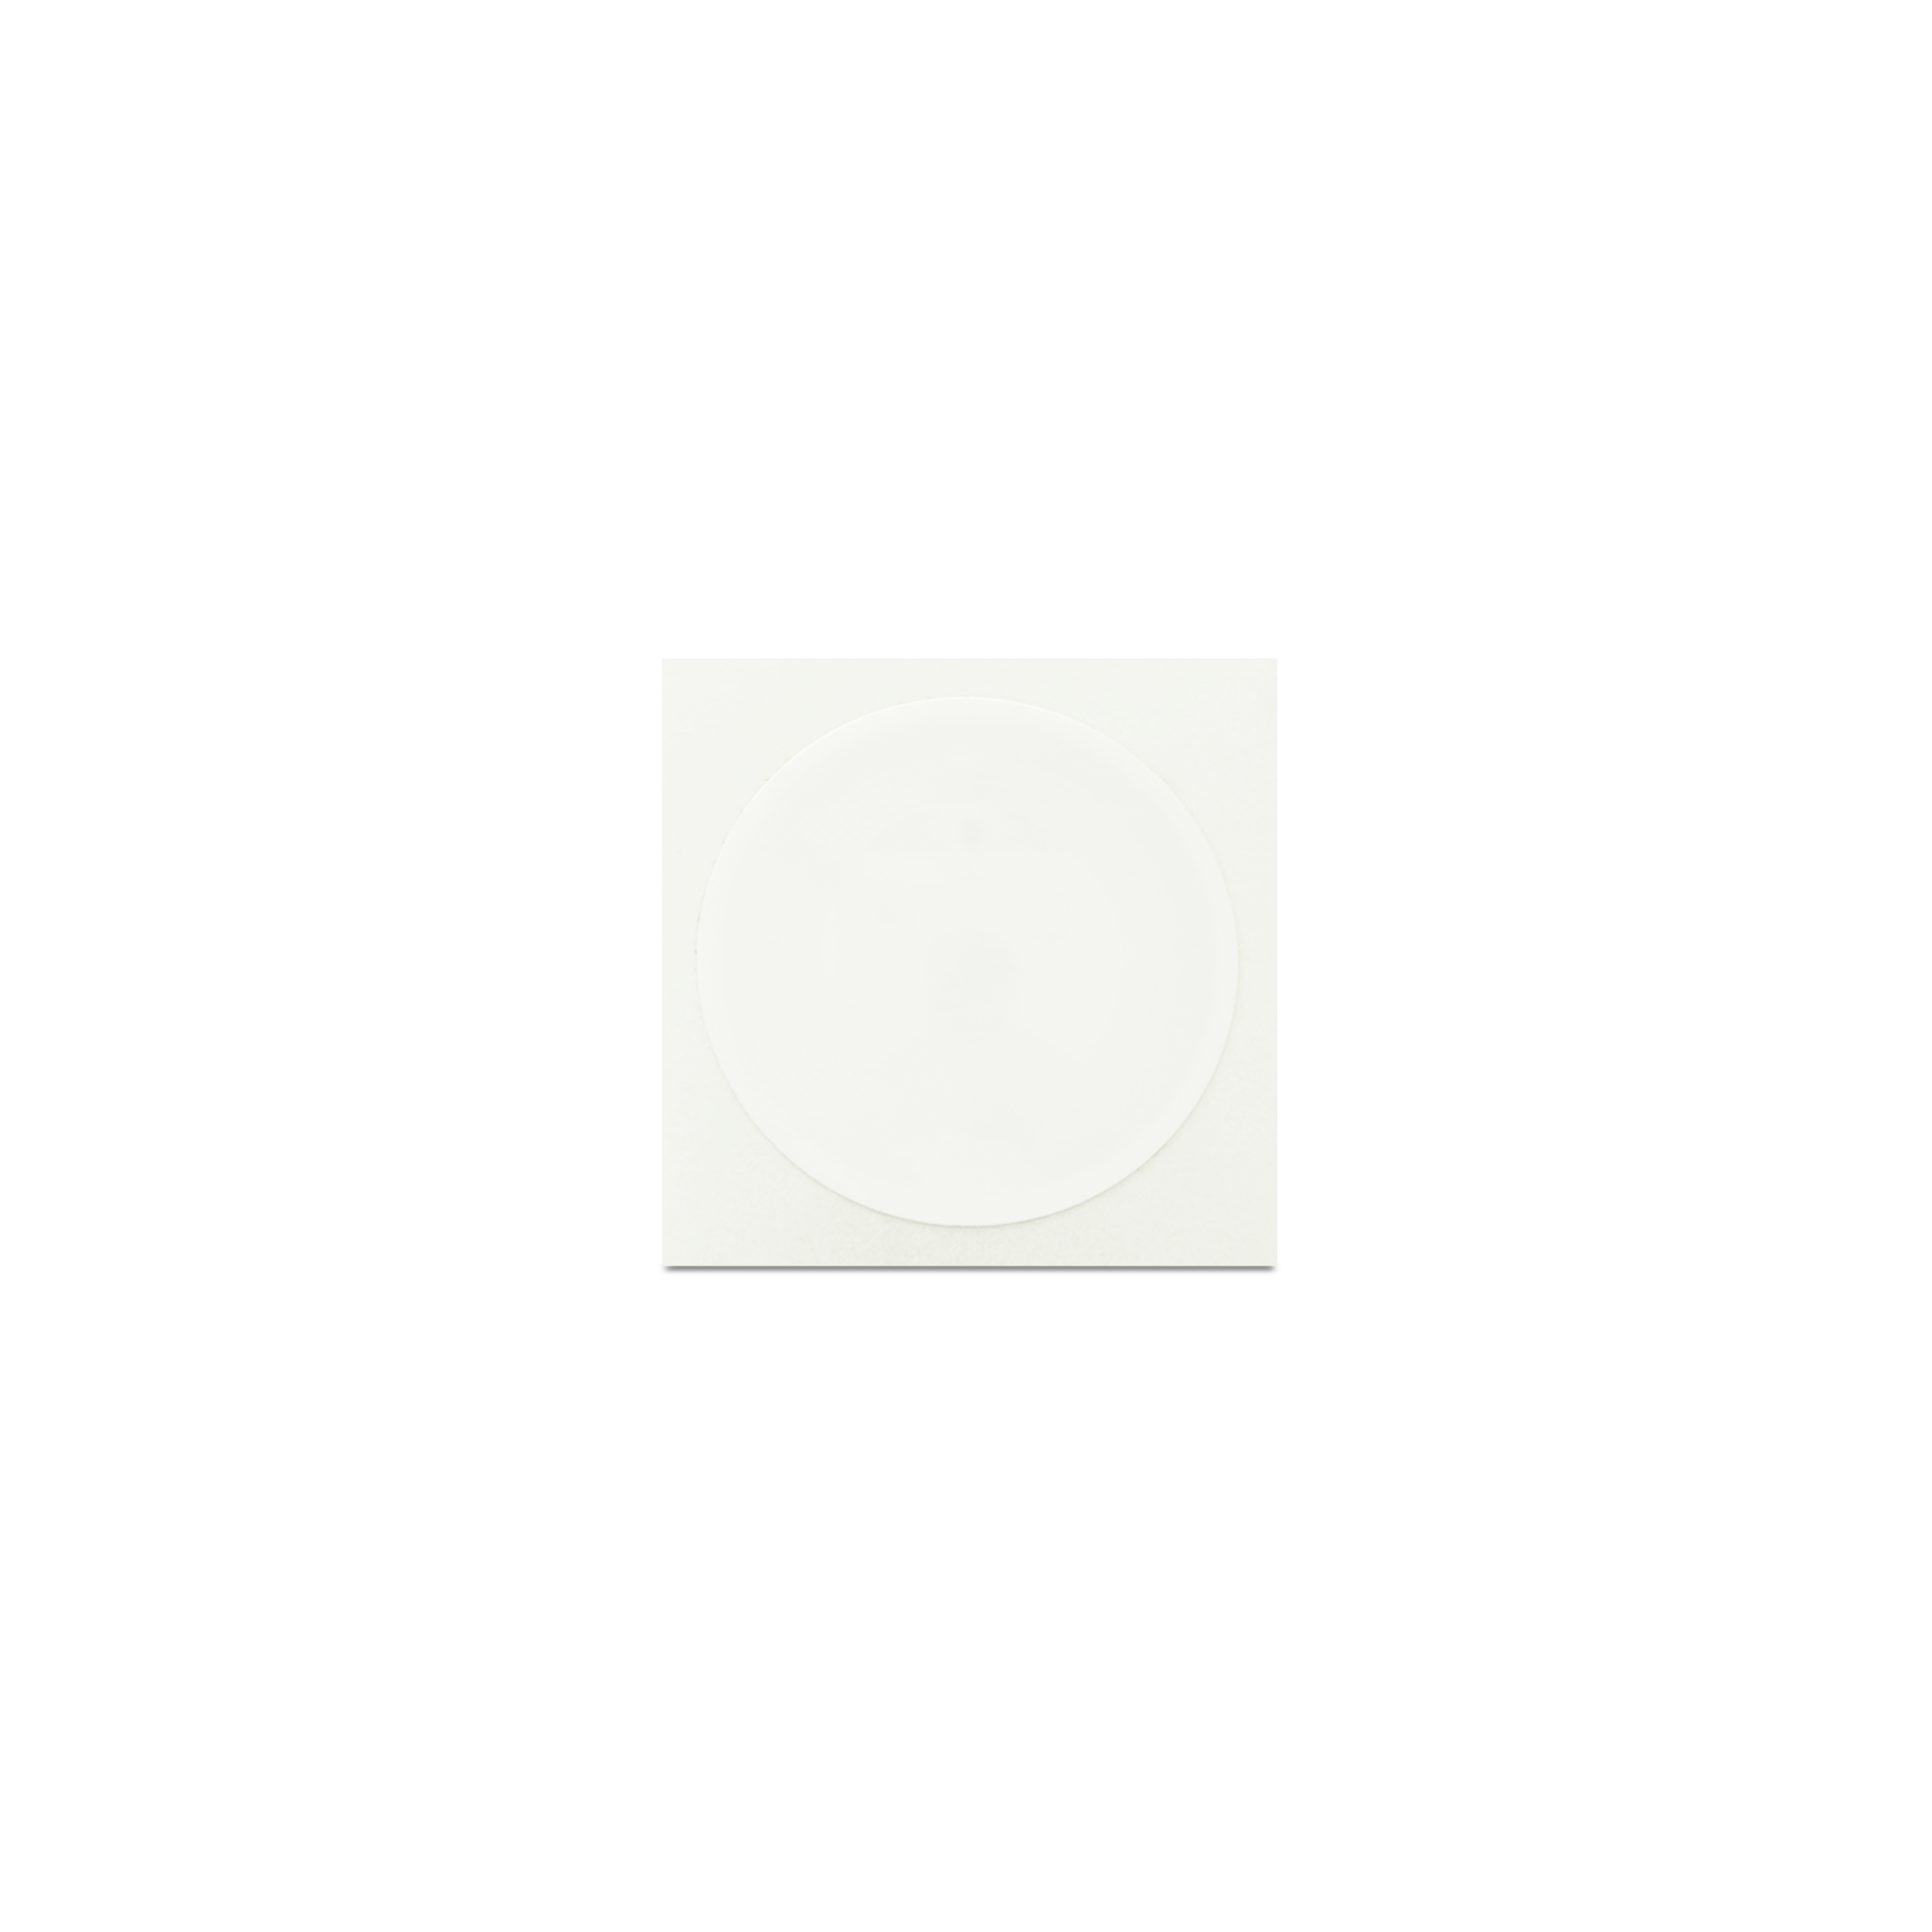 NFC Sticker Circus - 22 mm - NTAG213 - 180 Byte - white